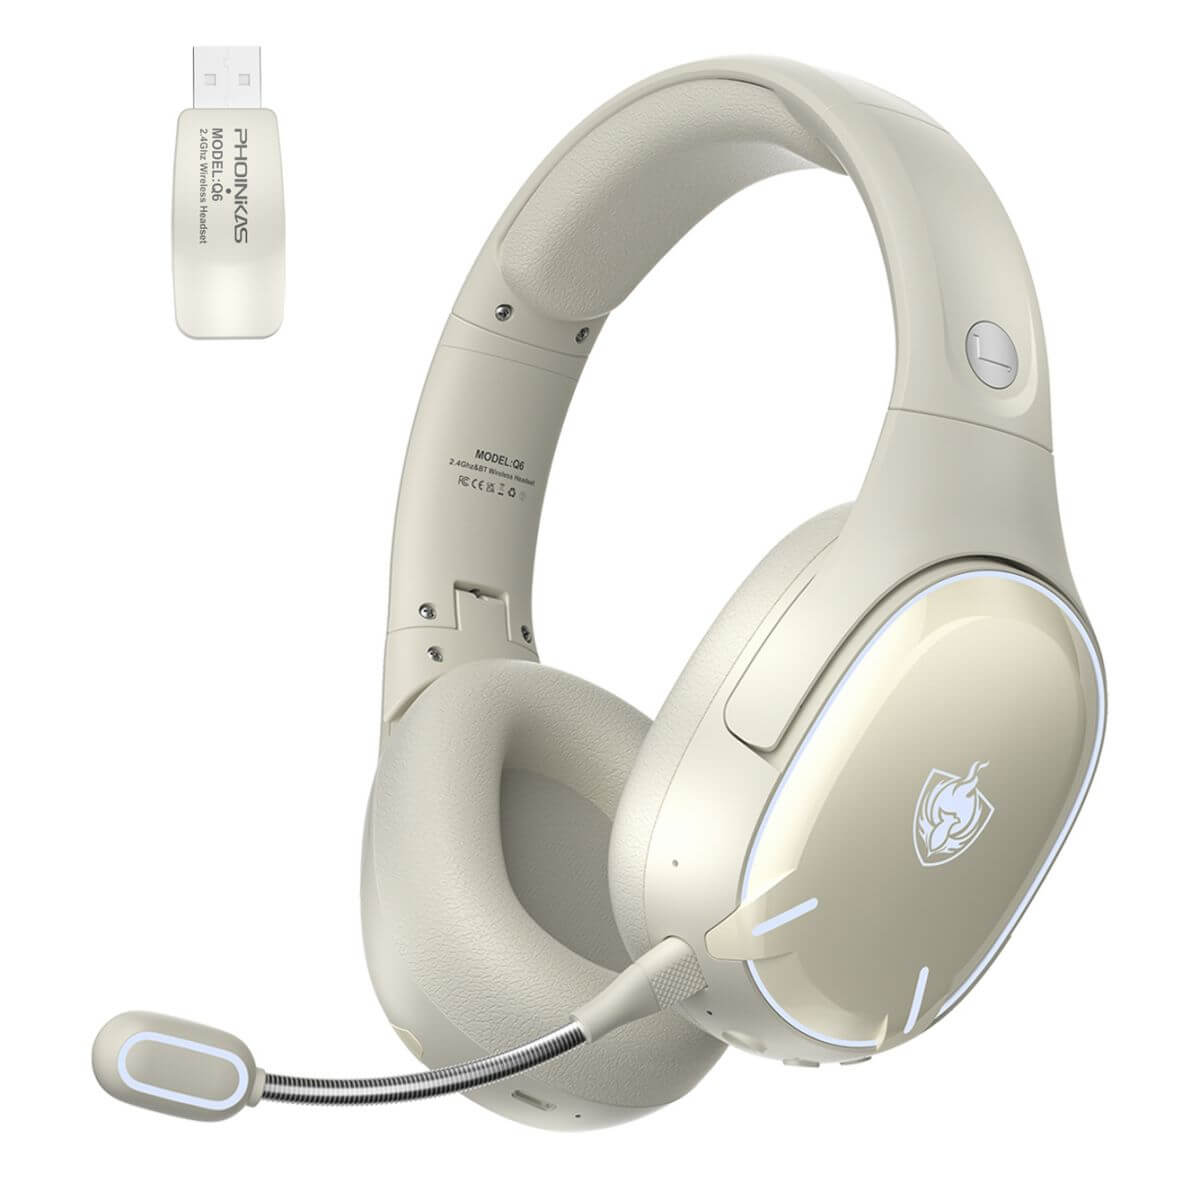 PHOINIKAS Q6 2.4Ghz Wireless Gaming Headphones White - Hugmie